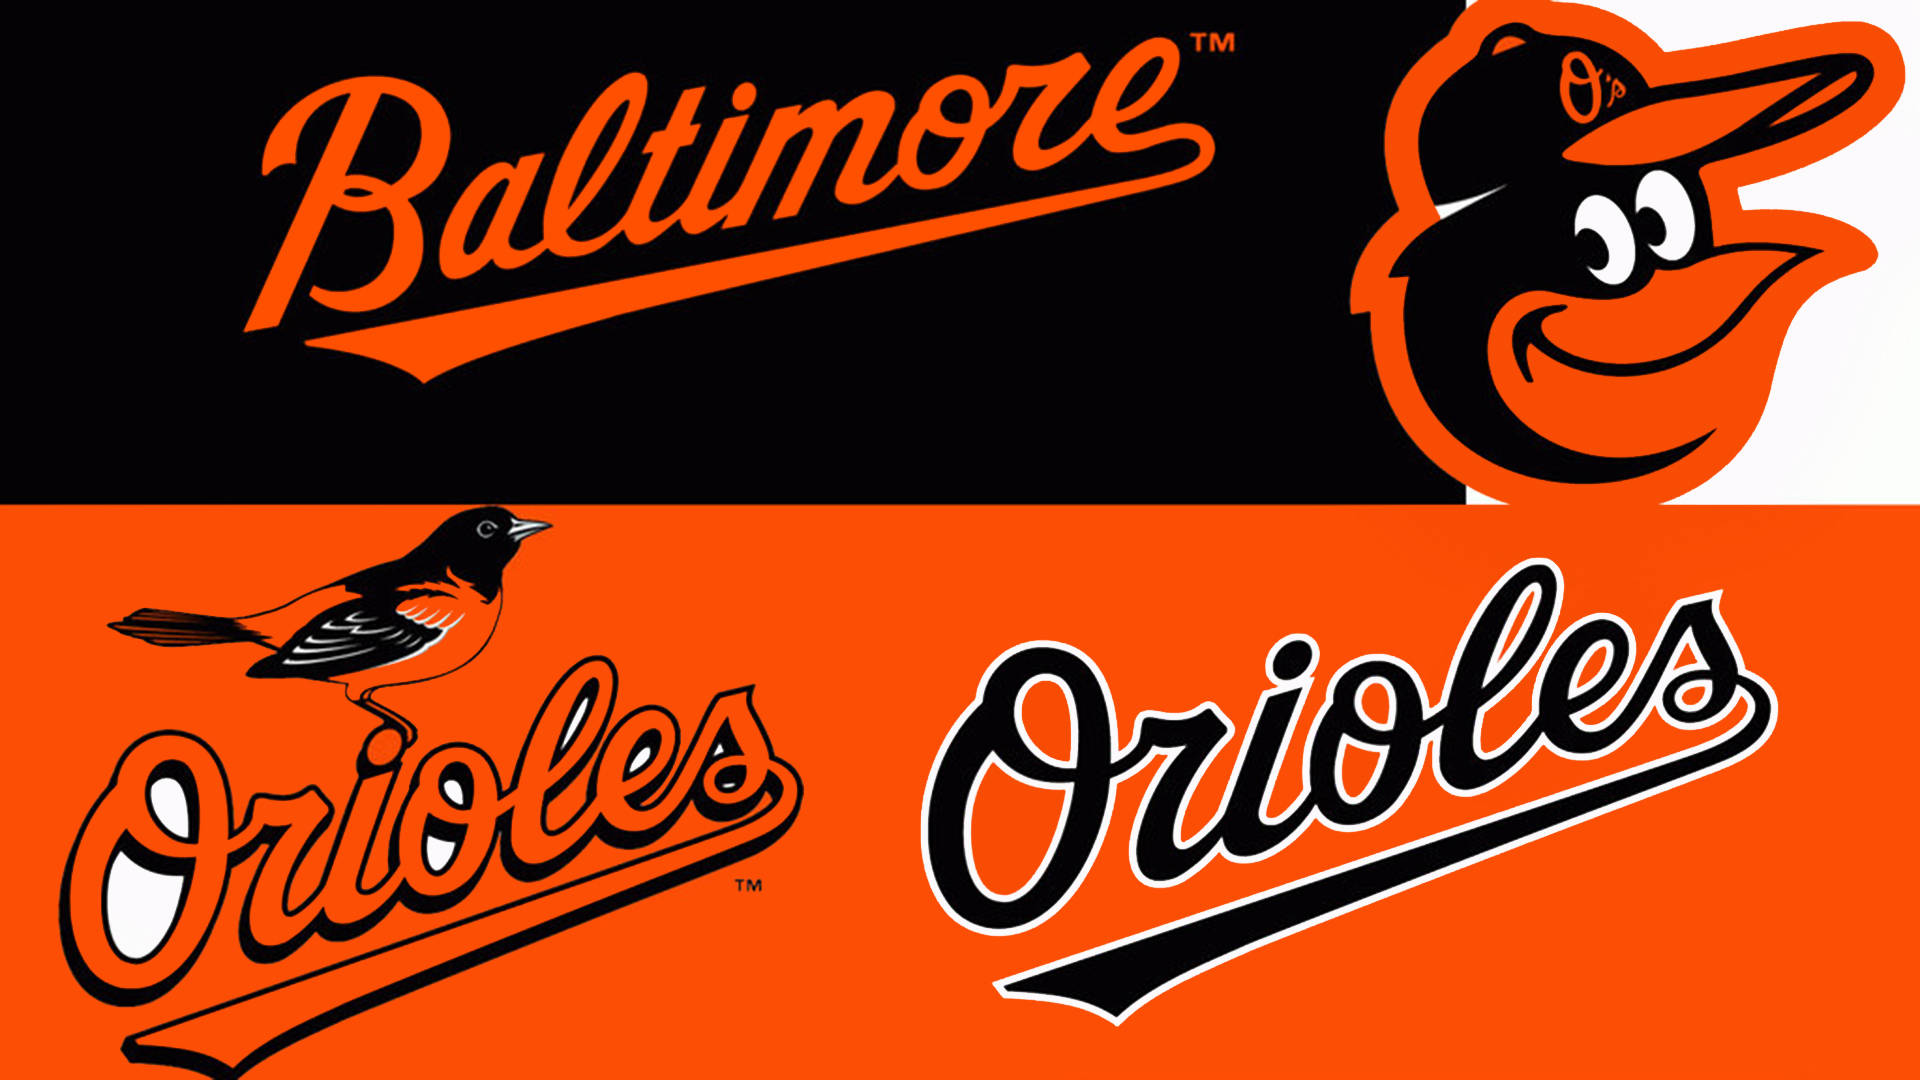 Baltimore Orioles I-Phone Wallpaper  Baltimore orioles wallpaper, Orioles  wallpaper, Baltimore orioles iphone wallpaper